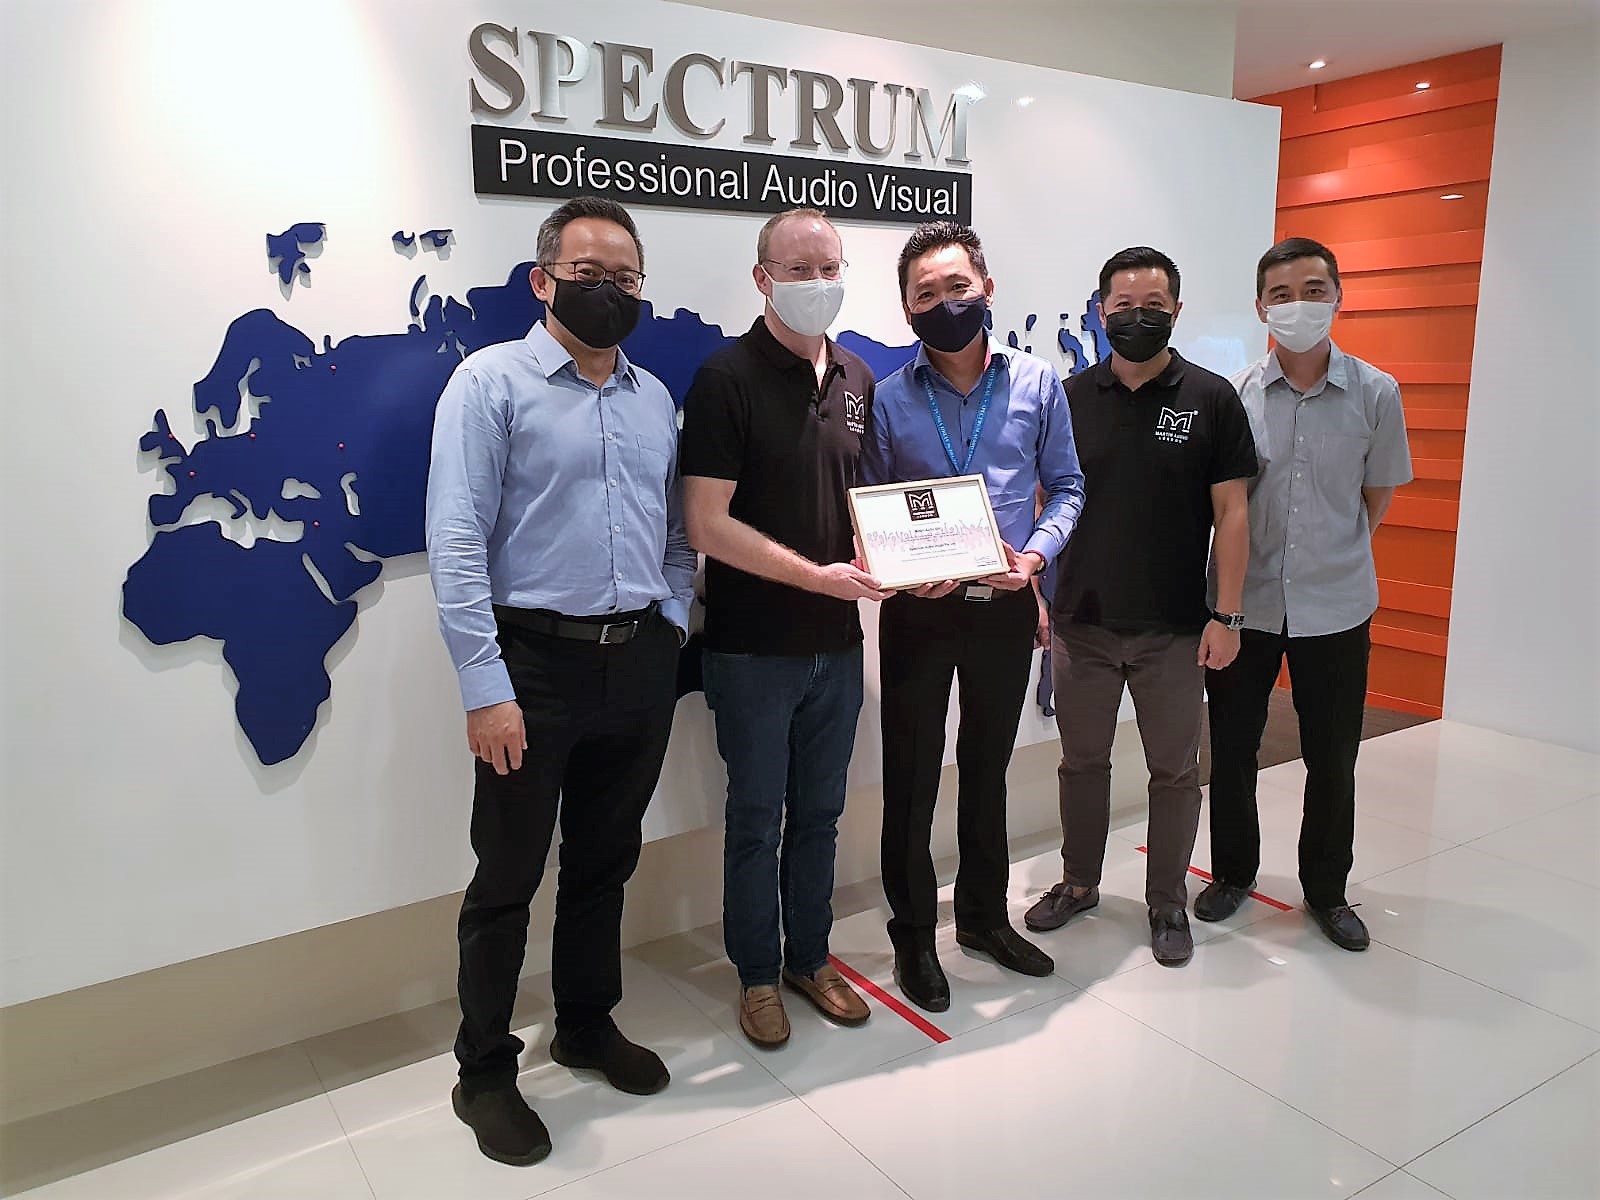 Spectrum Audio Visual is the new Singapore distributor for Martin Audio